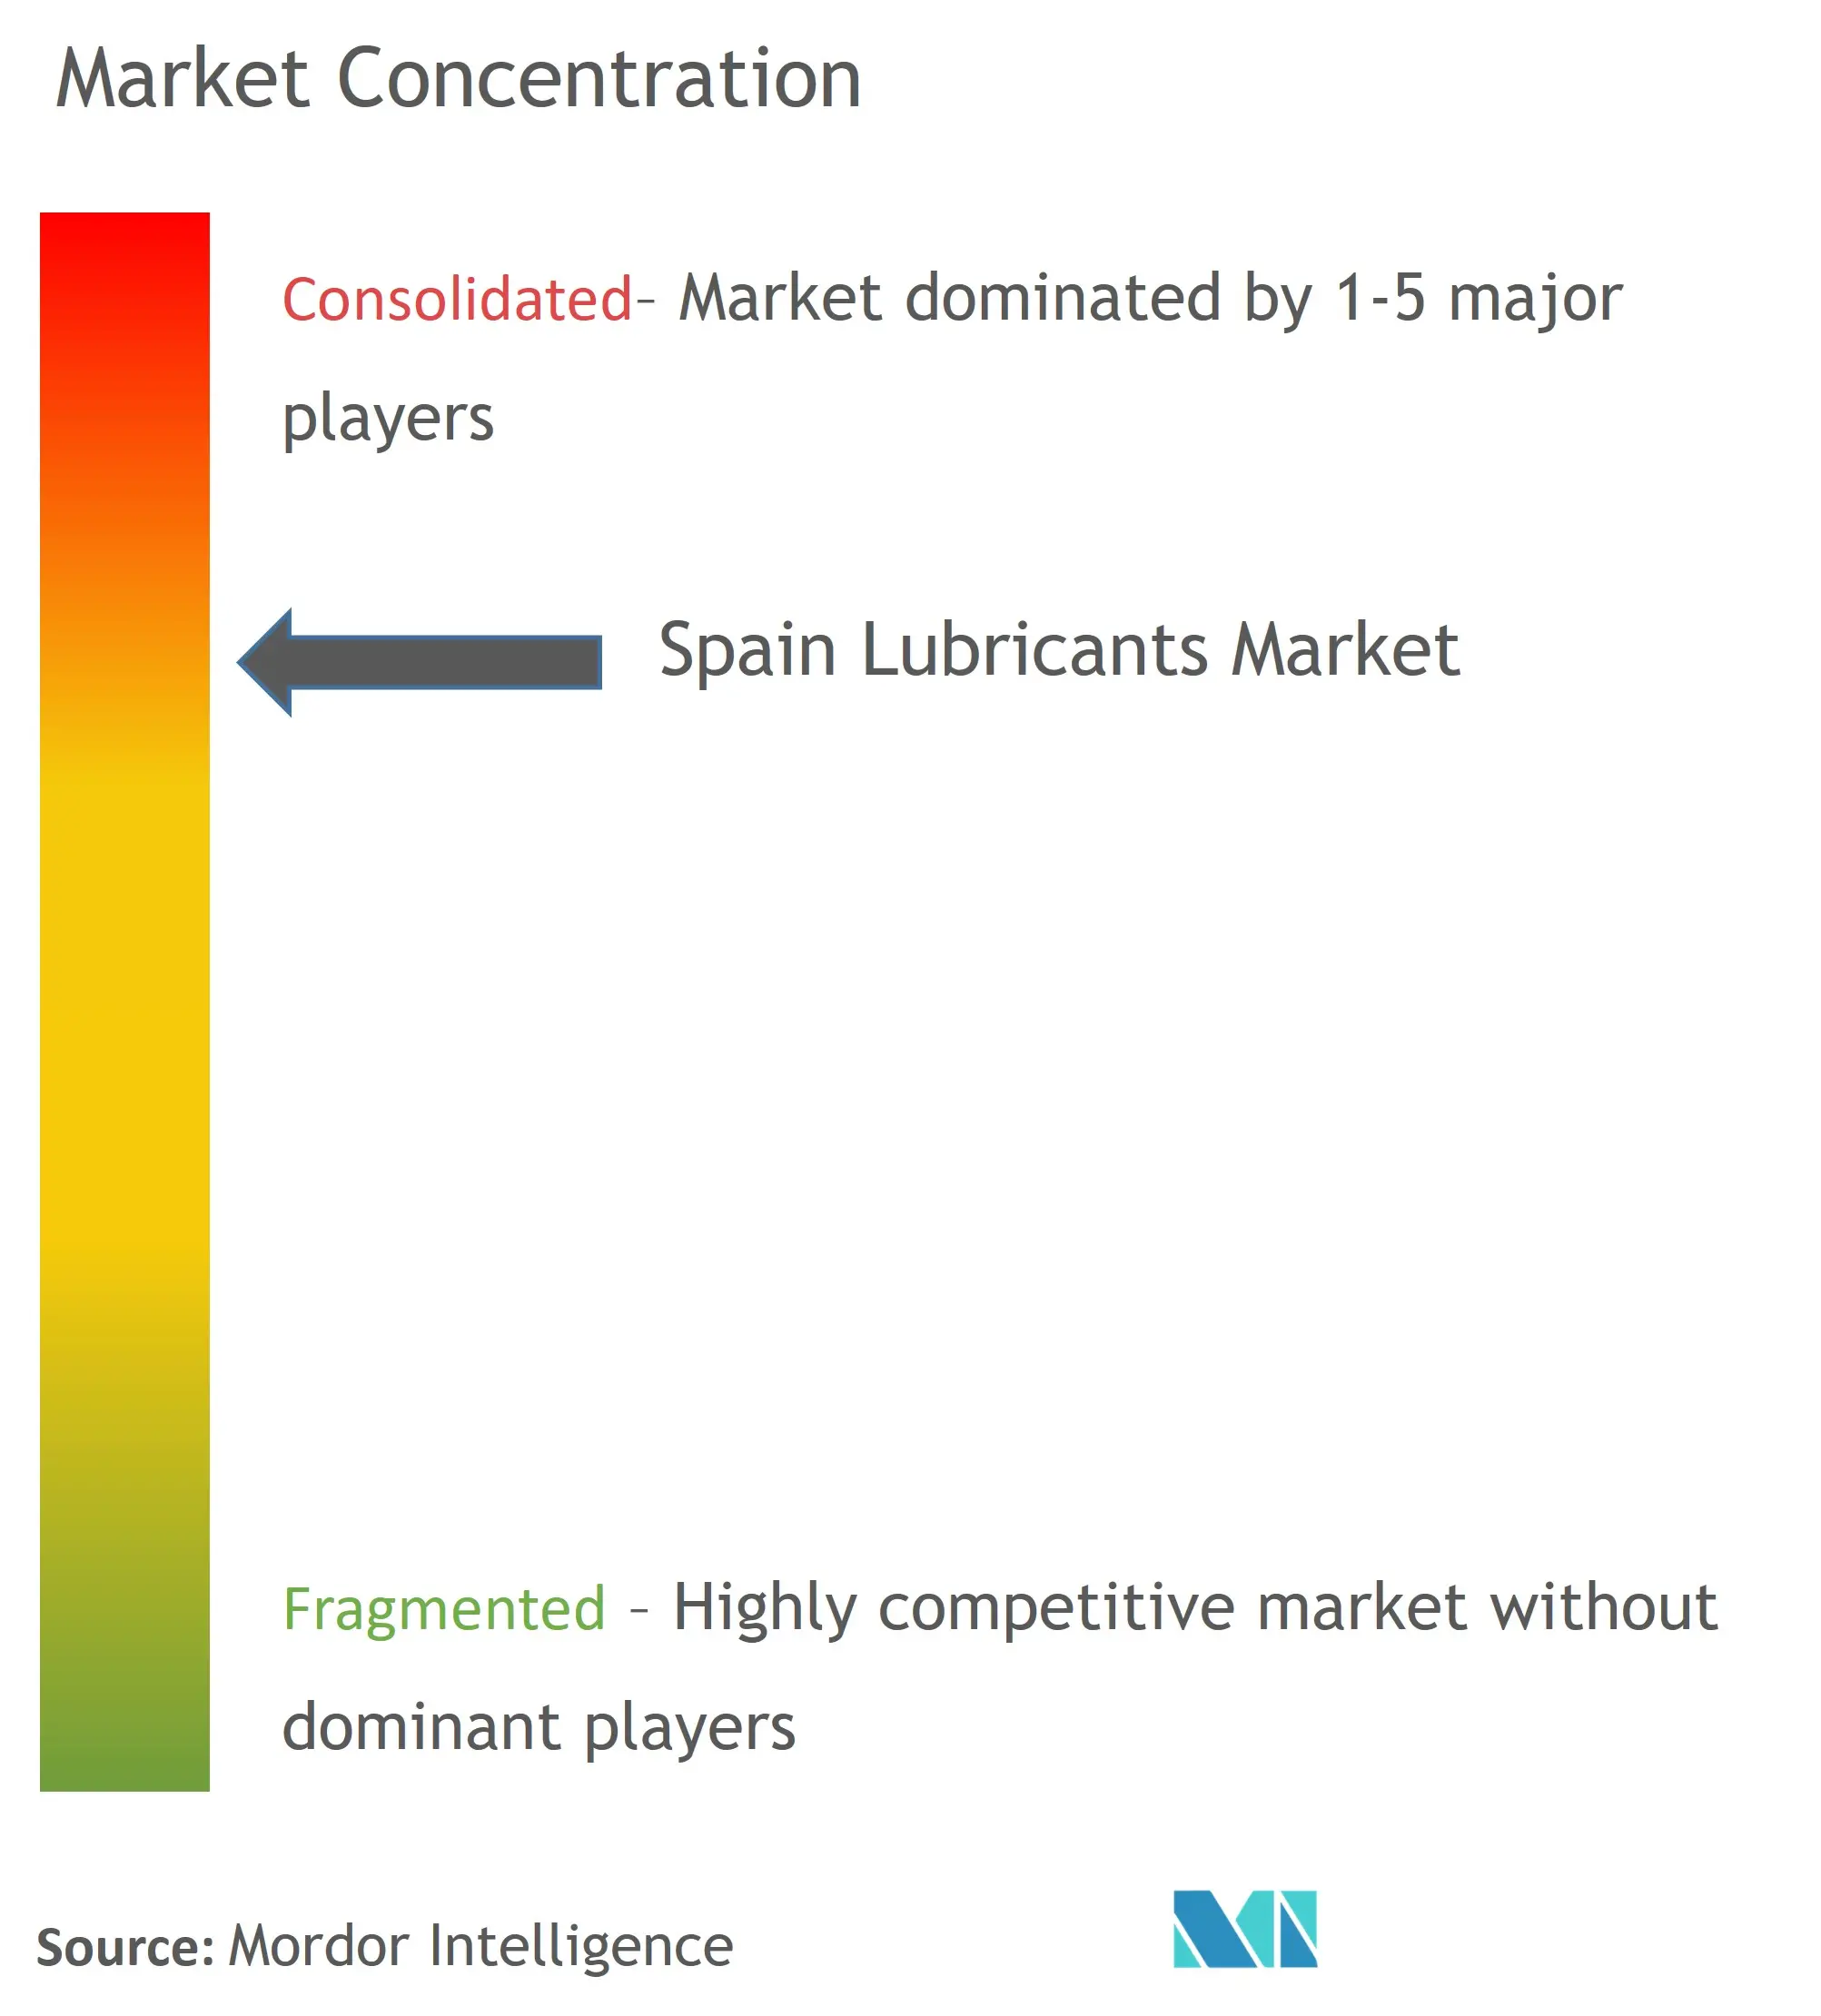 Spain Lubricants Market Concentration